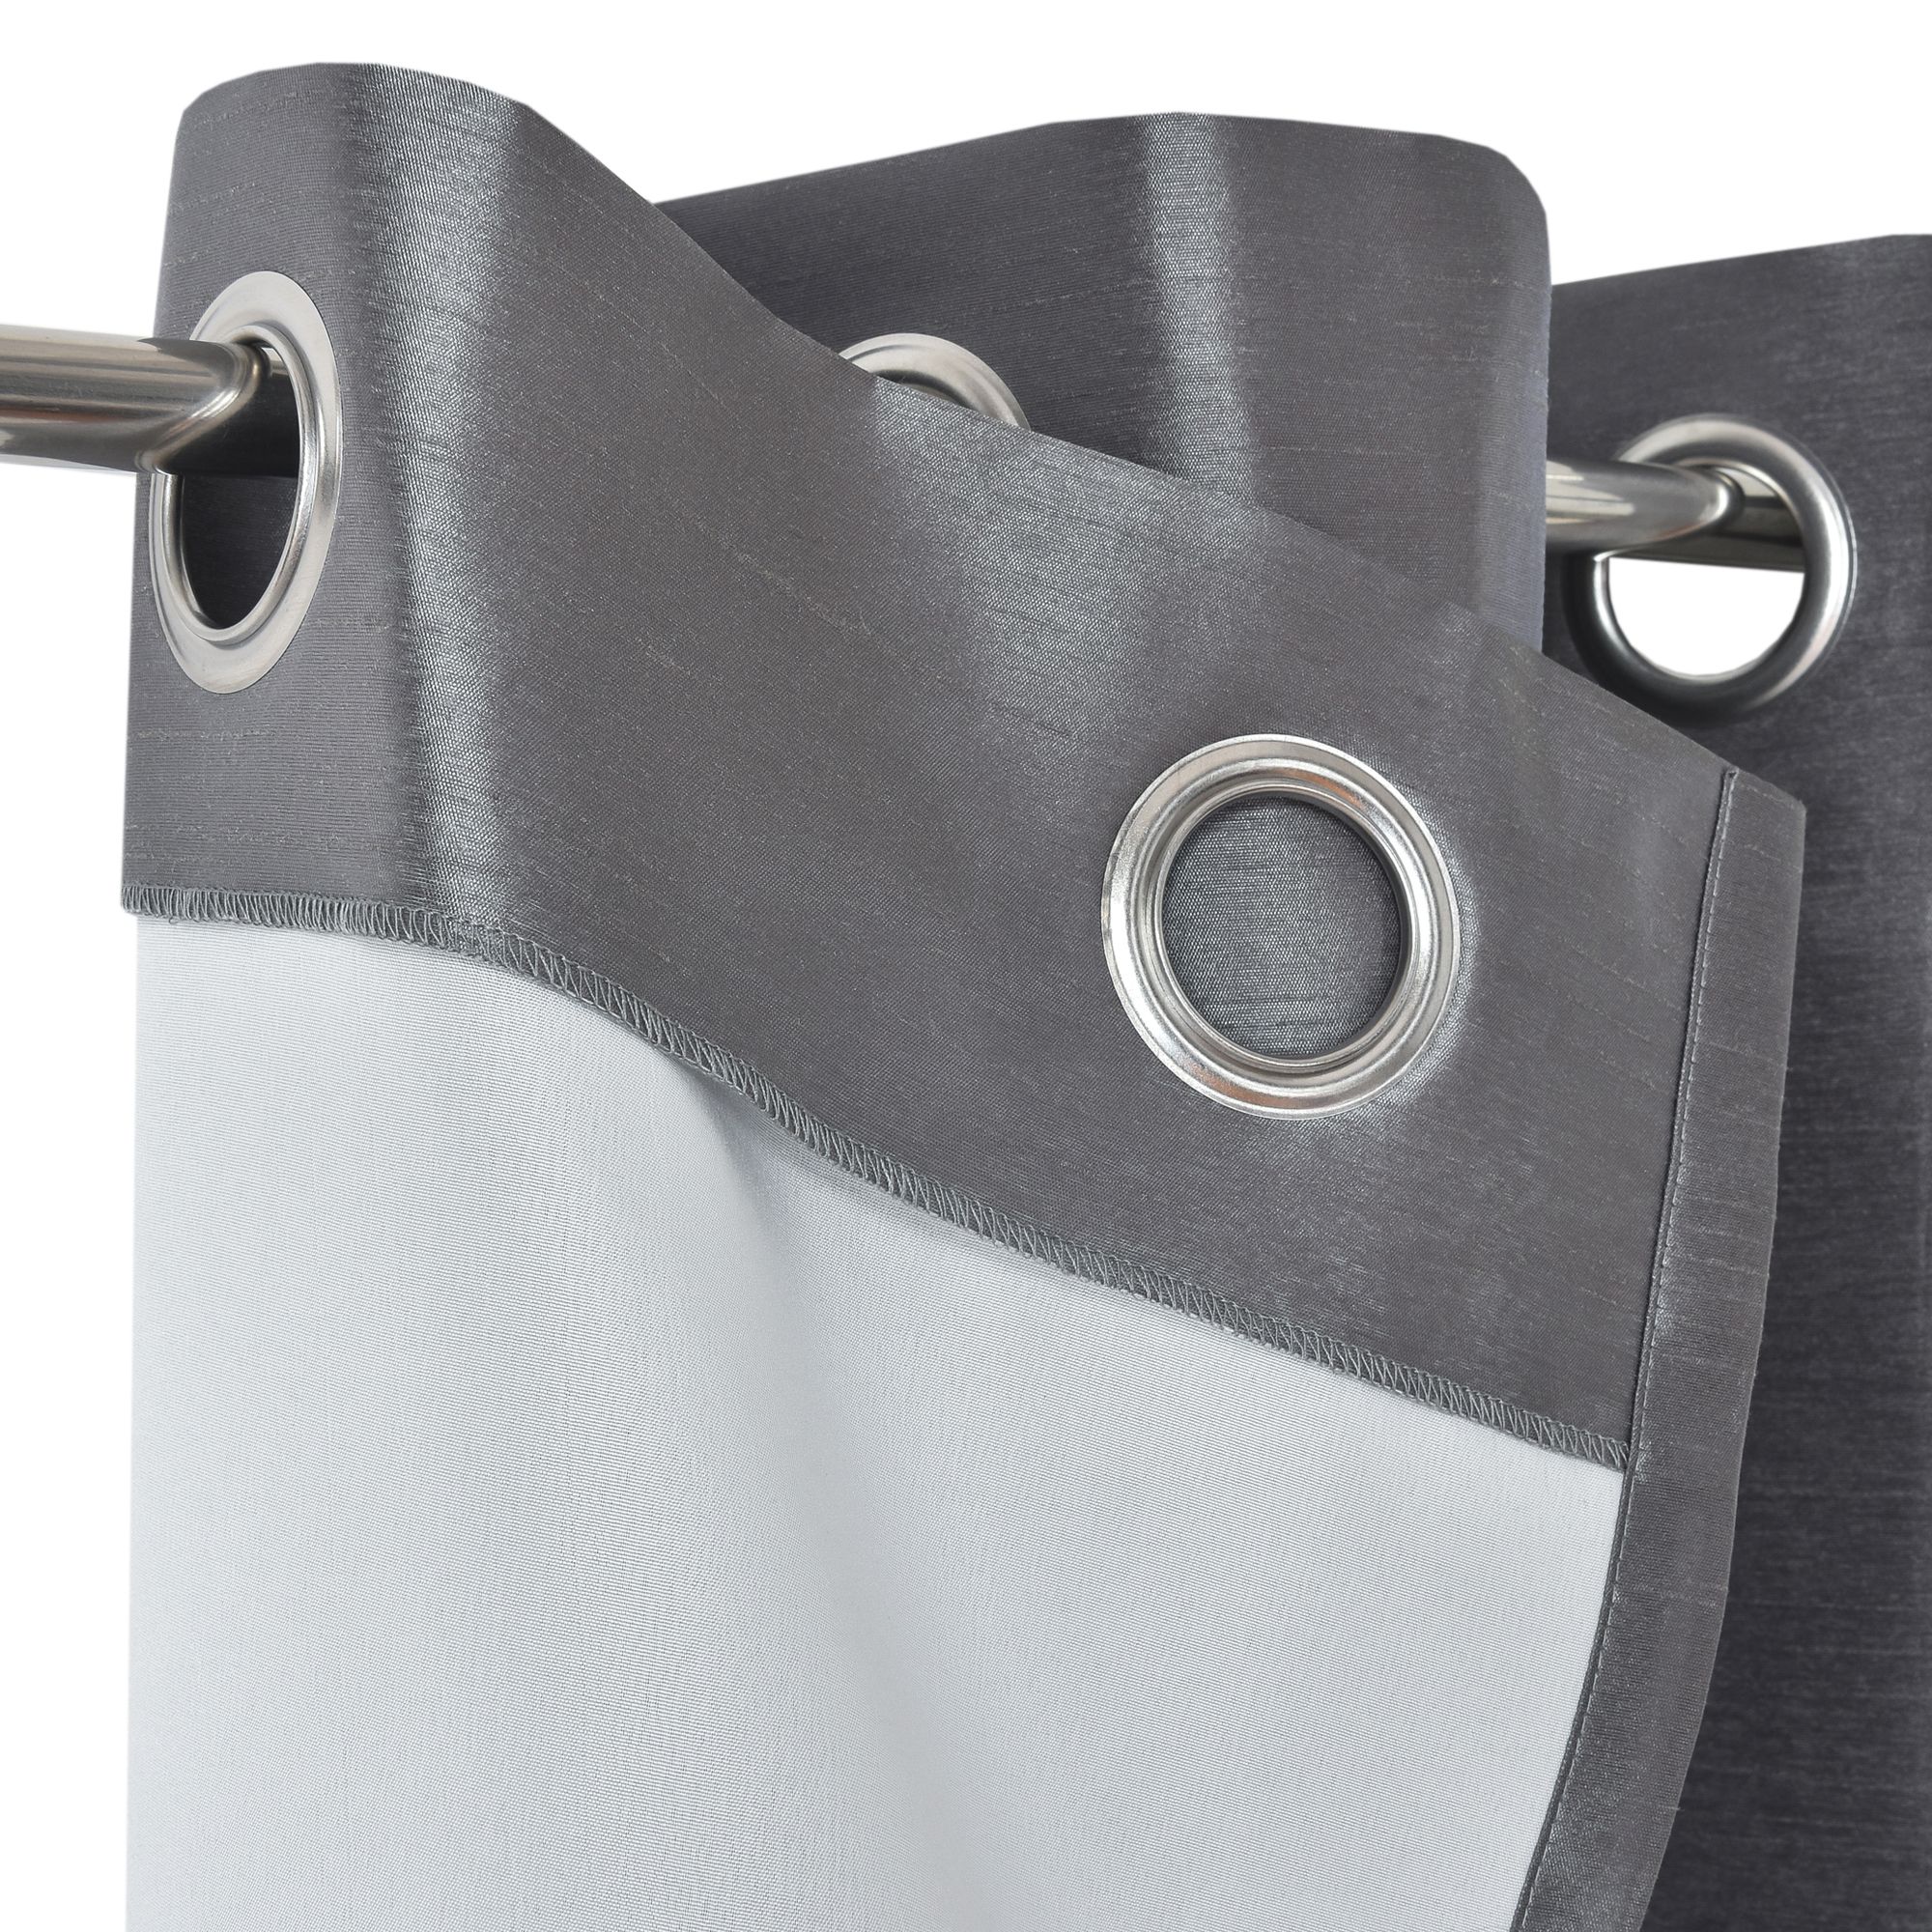 Morea Light grey Plain woven Lined Eyelet Curtain (W)167cm (L)228cm, Pair